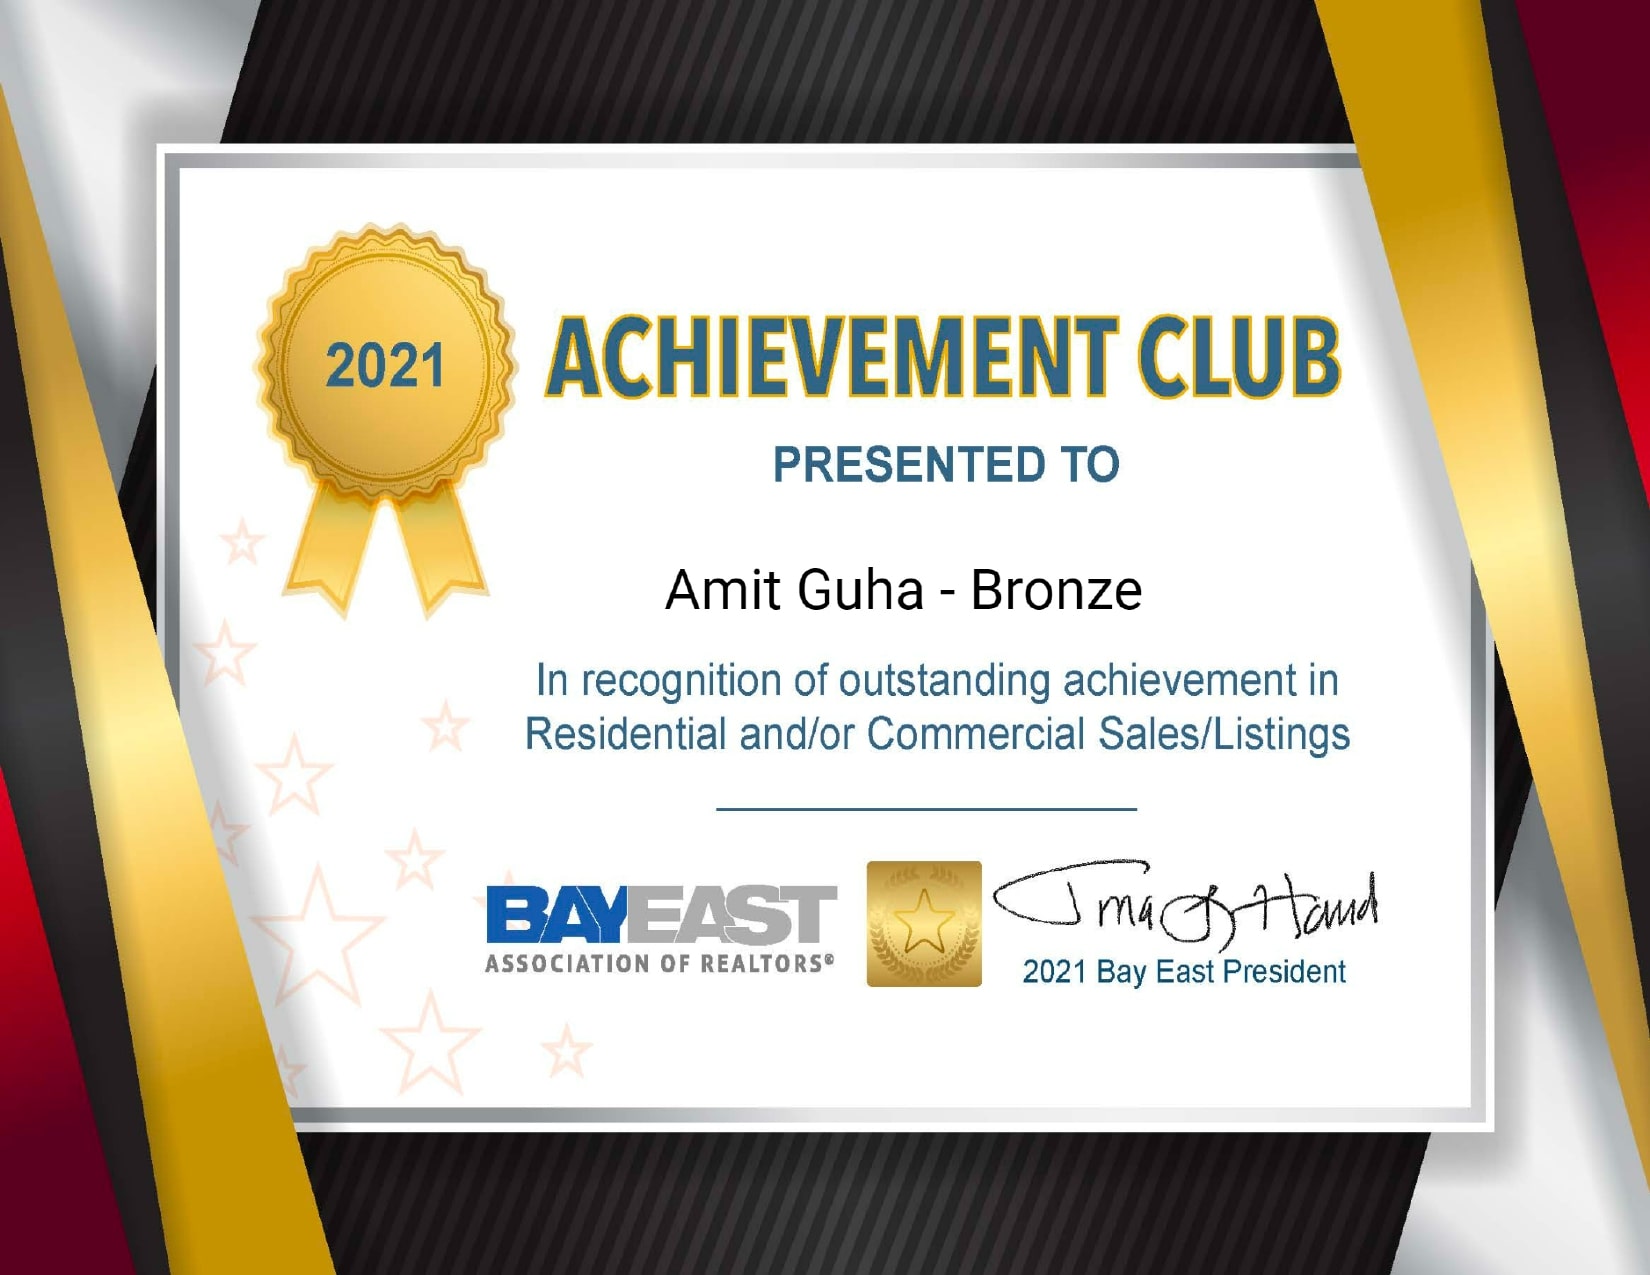 Amit-certificate